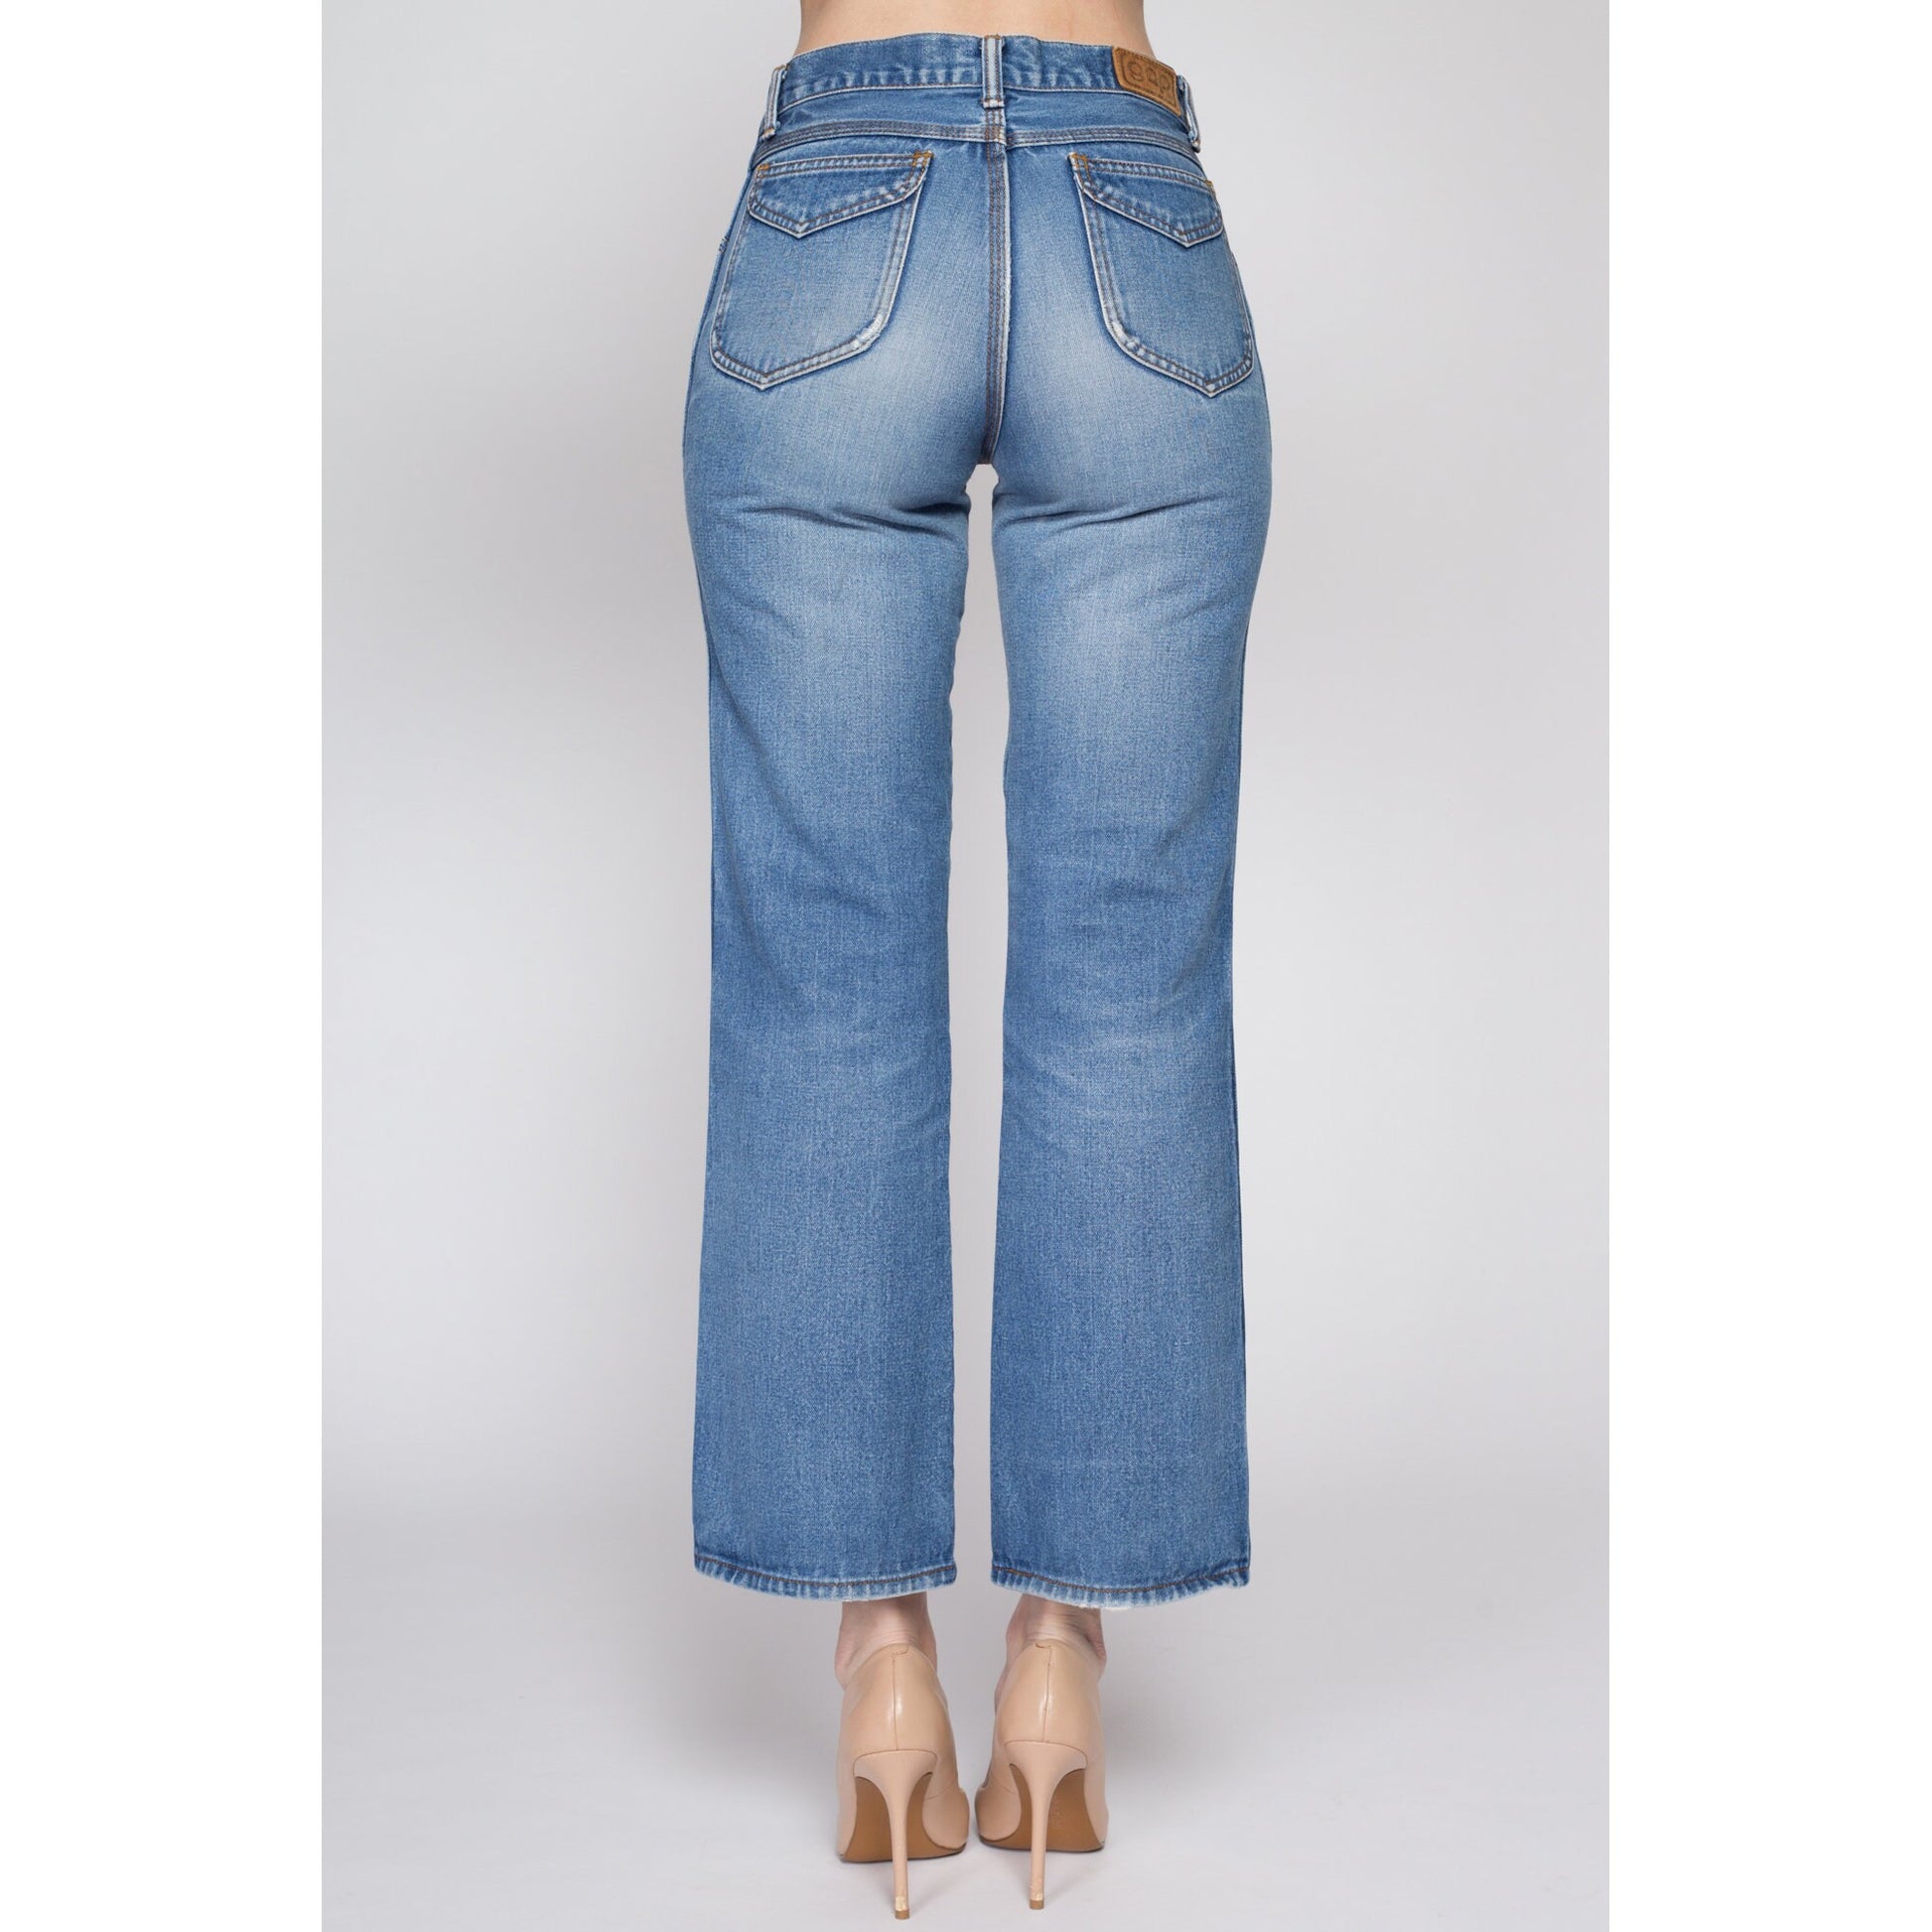 XS-Sm 70s Gap Mid Rise Jeans Petite | Vintage Medium Wash Denim Boho Flares